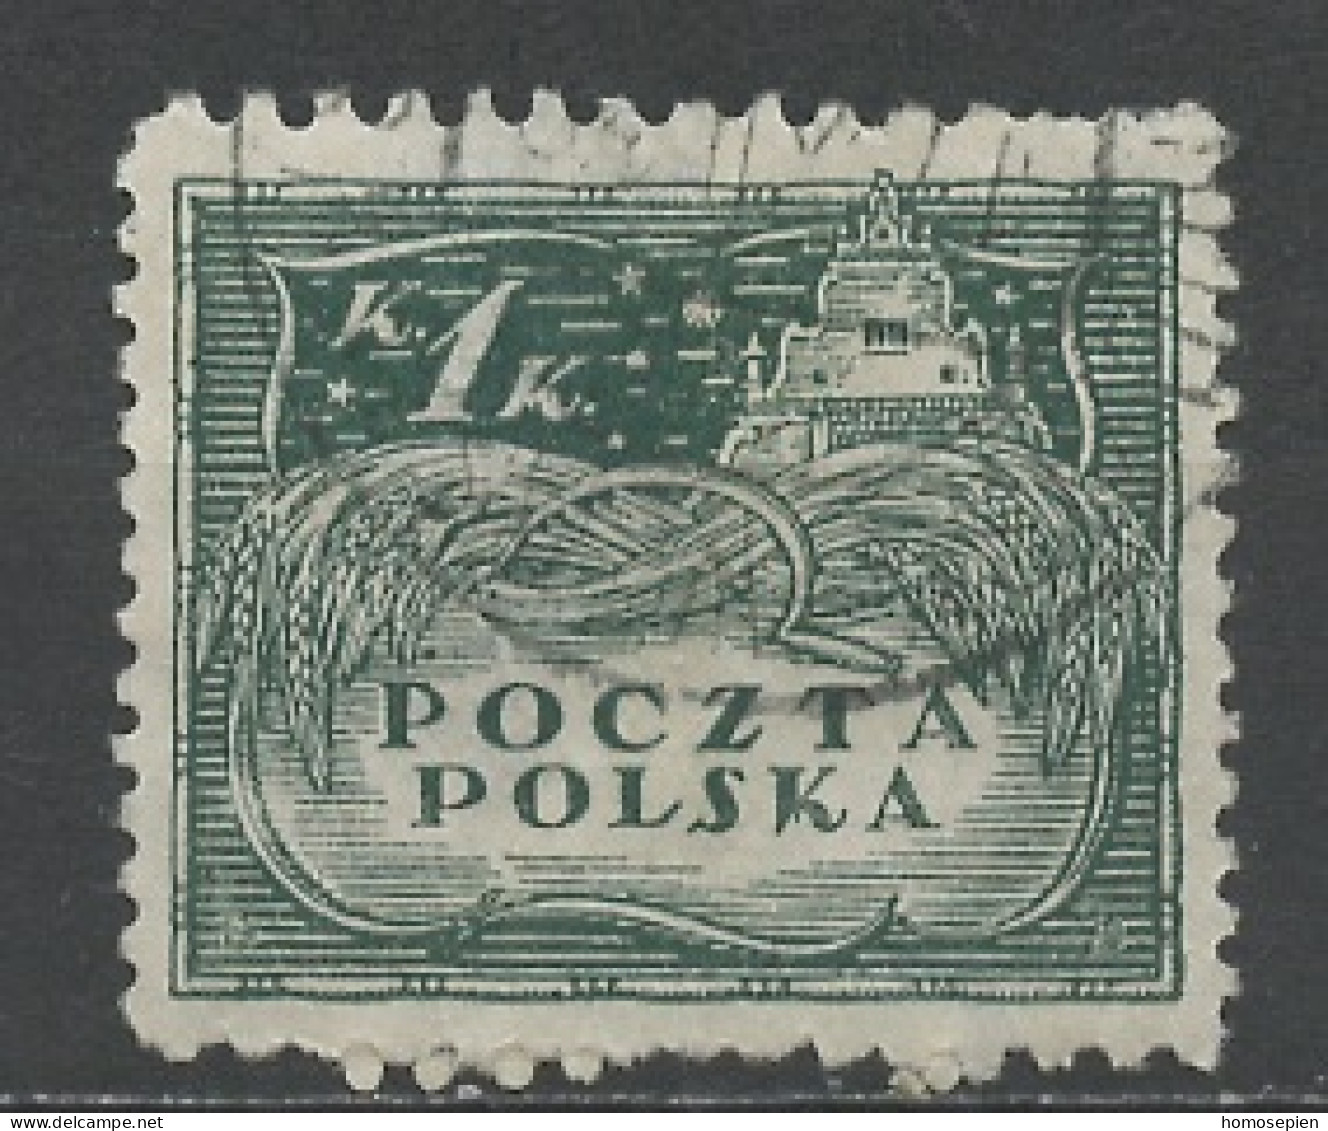 Pologne - Poland - Polen 1919 Y&T N°191 - Michel N°84 (o) - 1k Symbole De L'agriculture - Used Stamps